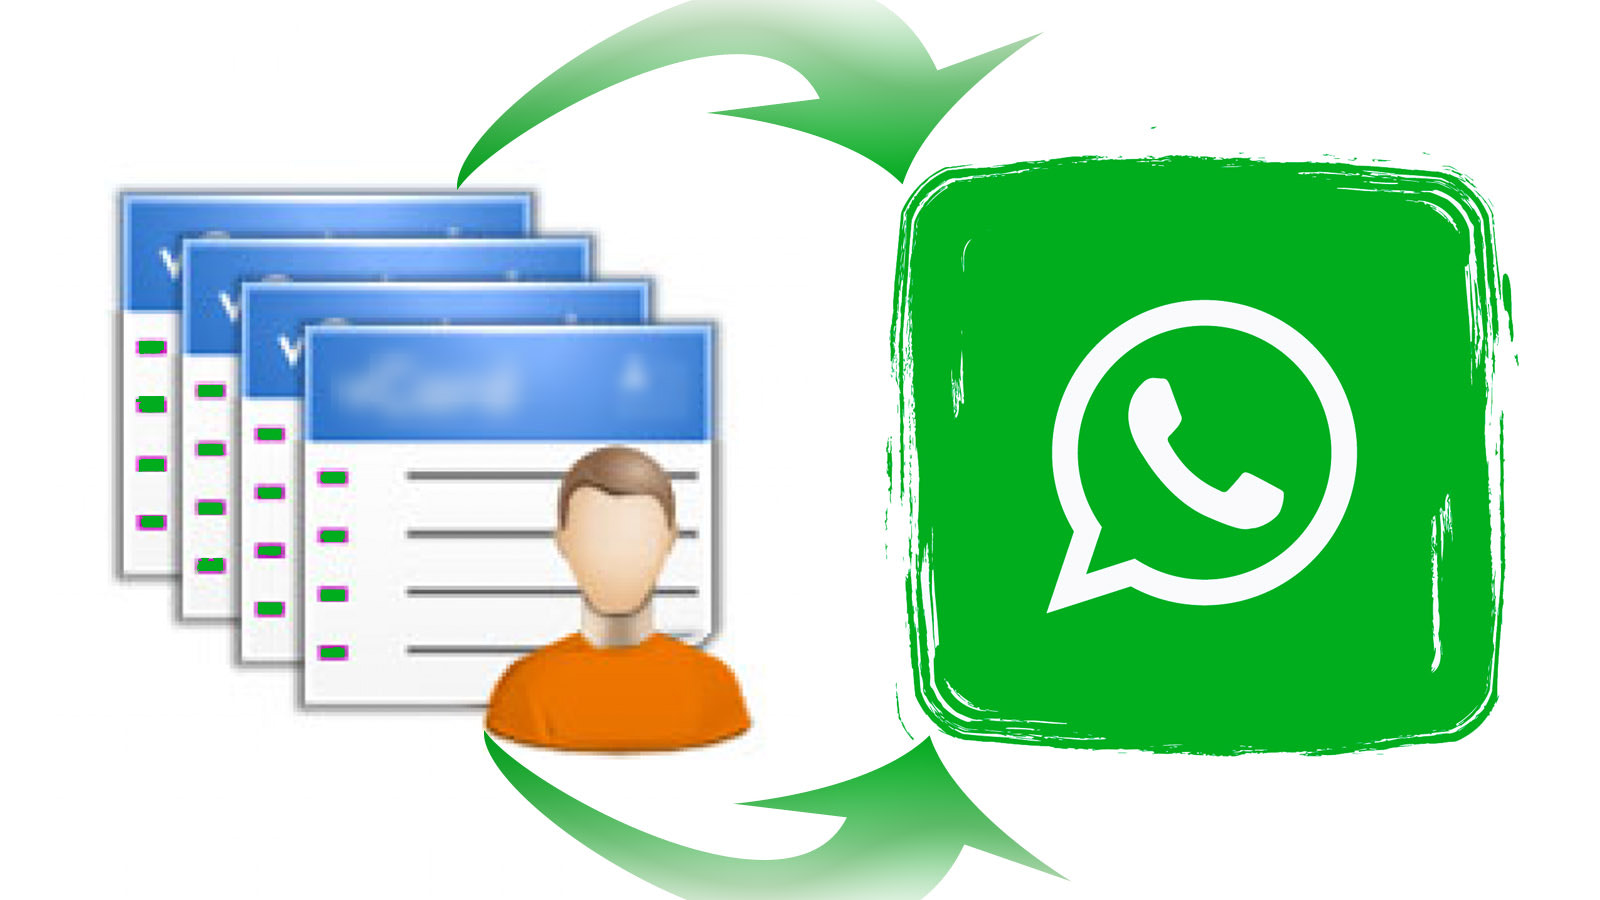 Transfiere usuarios a whatsapp y a grupos de whatsapp.